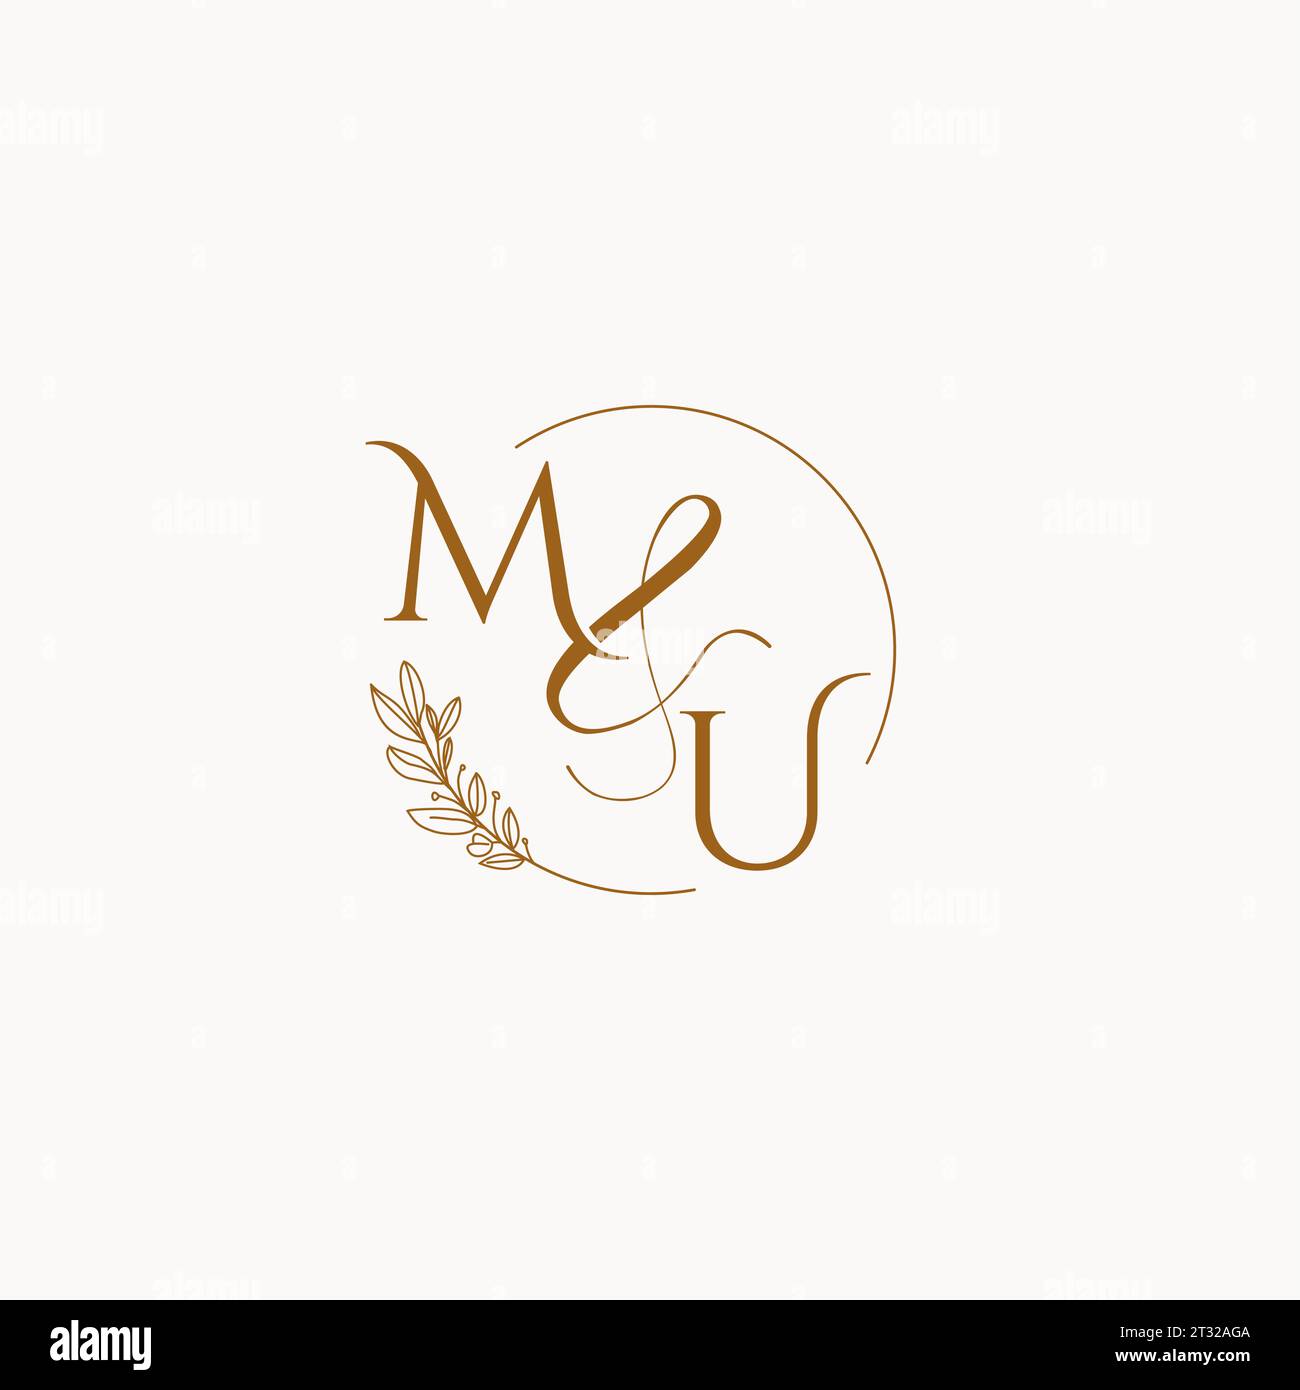 MU initial wedding monogram logo design ideas Stock Vector